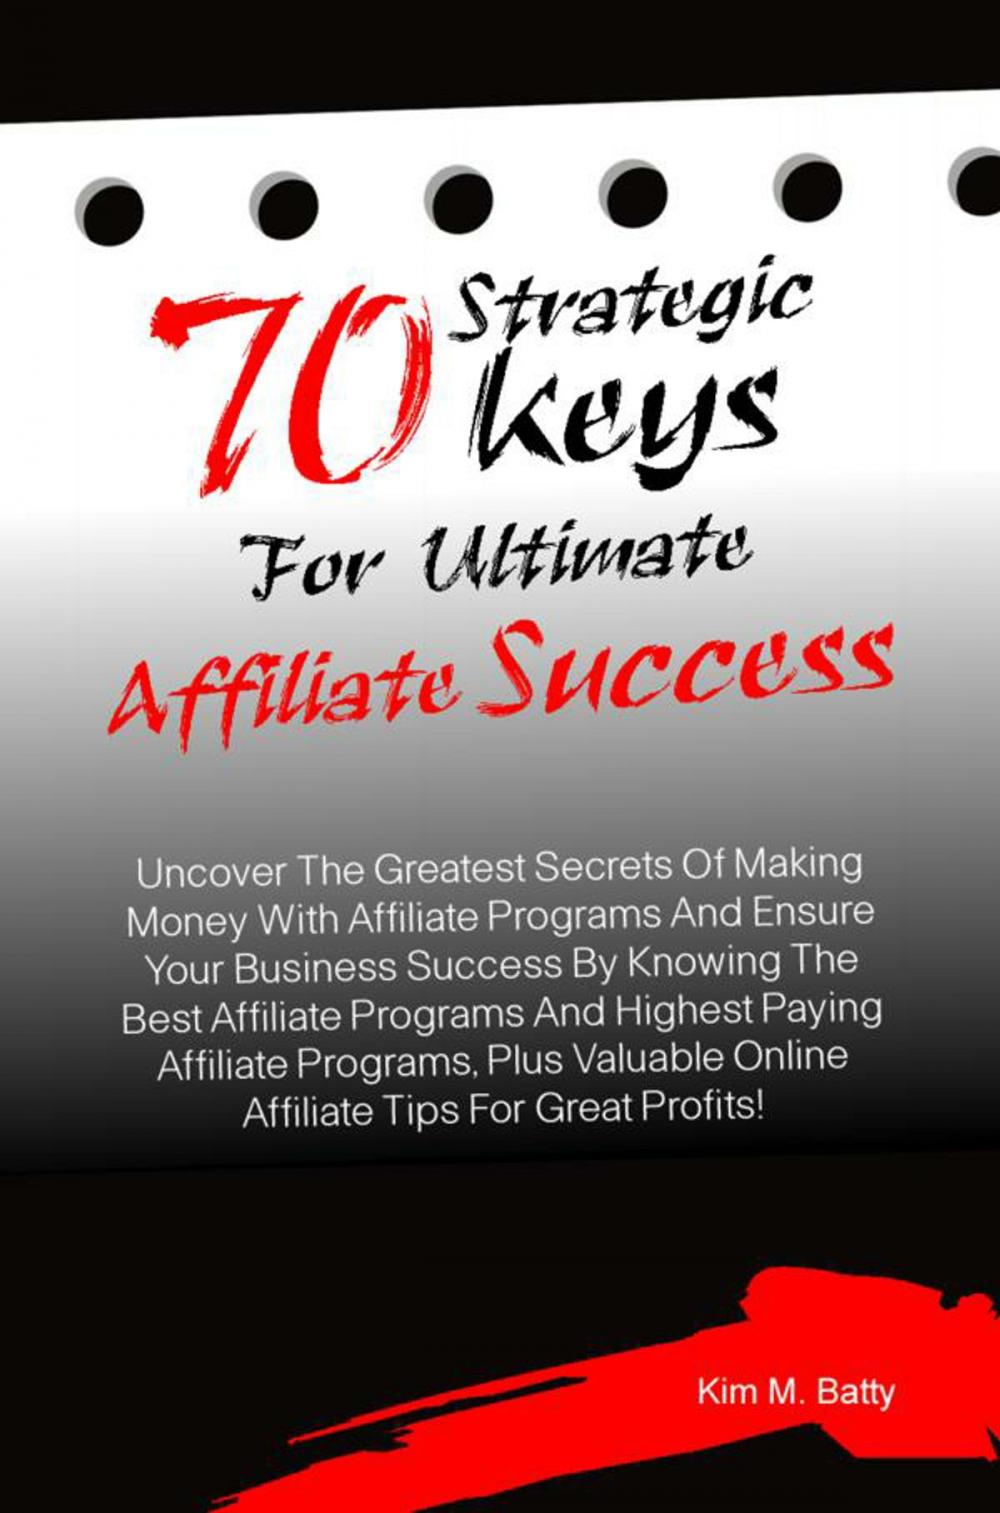 Big bigCover of 70 Strategic Keys For Ultimate Affiliate Success